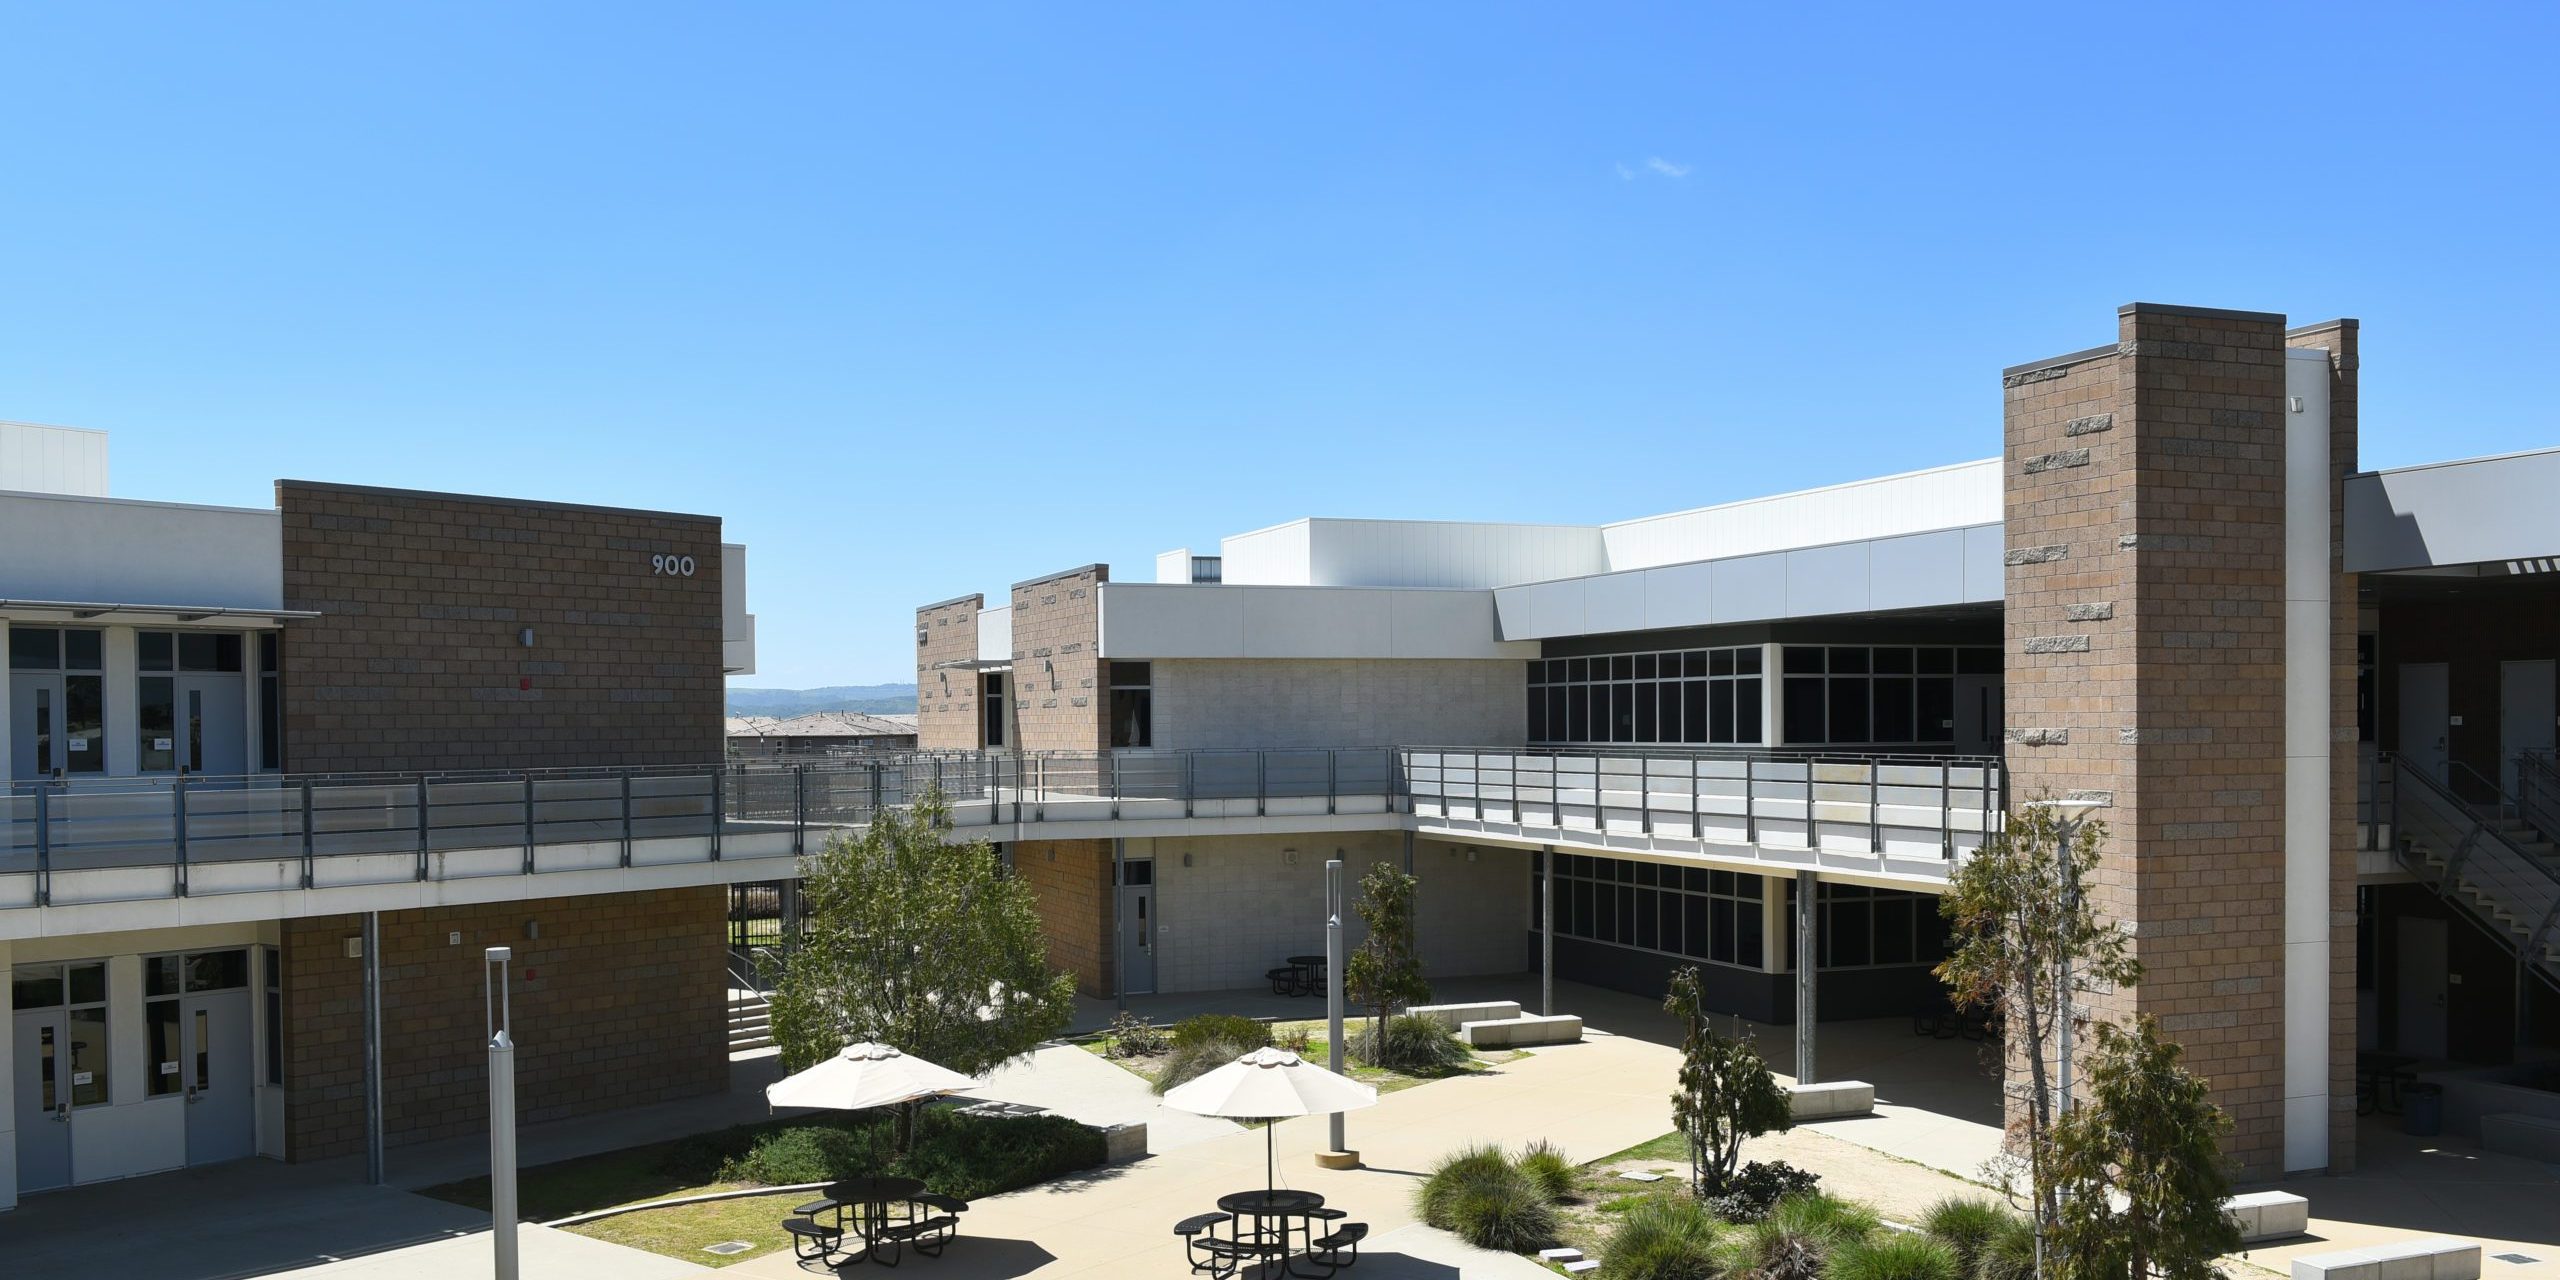 IRIVNE, CALIFORNIA - 2 APR 2023: Classroom buildings on the Campus of Portola High School.